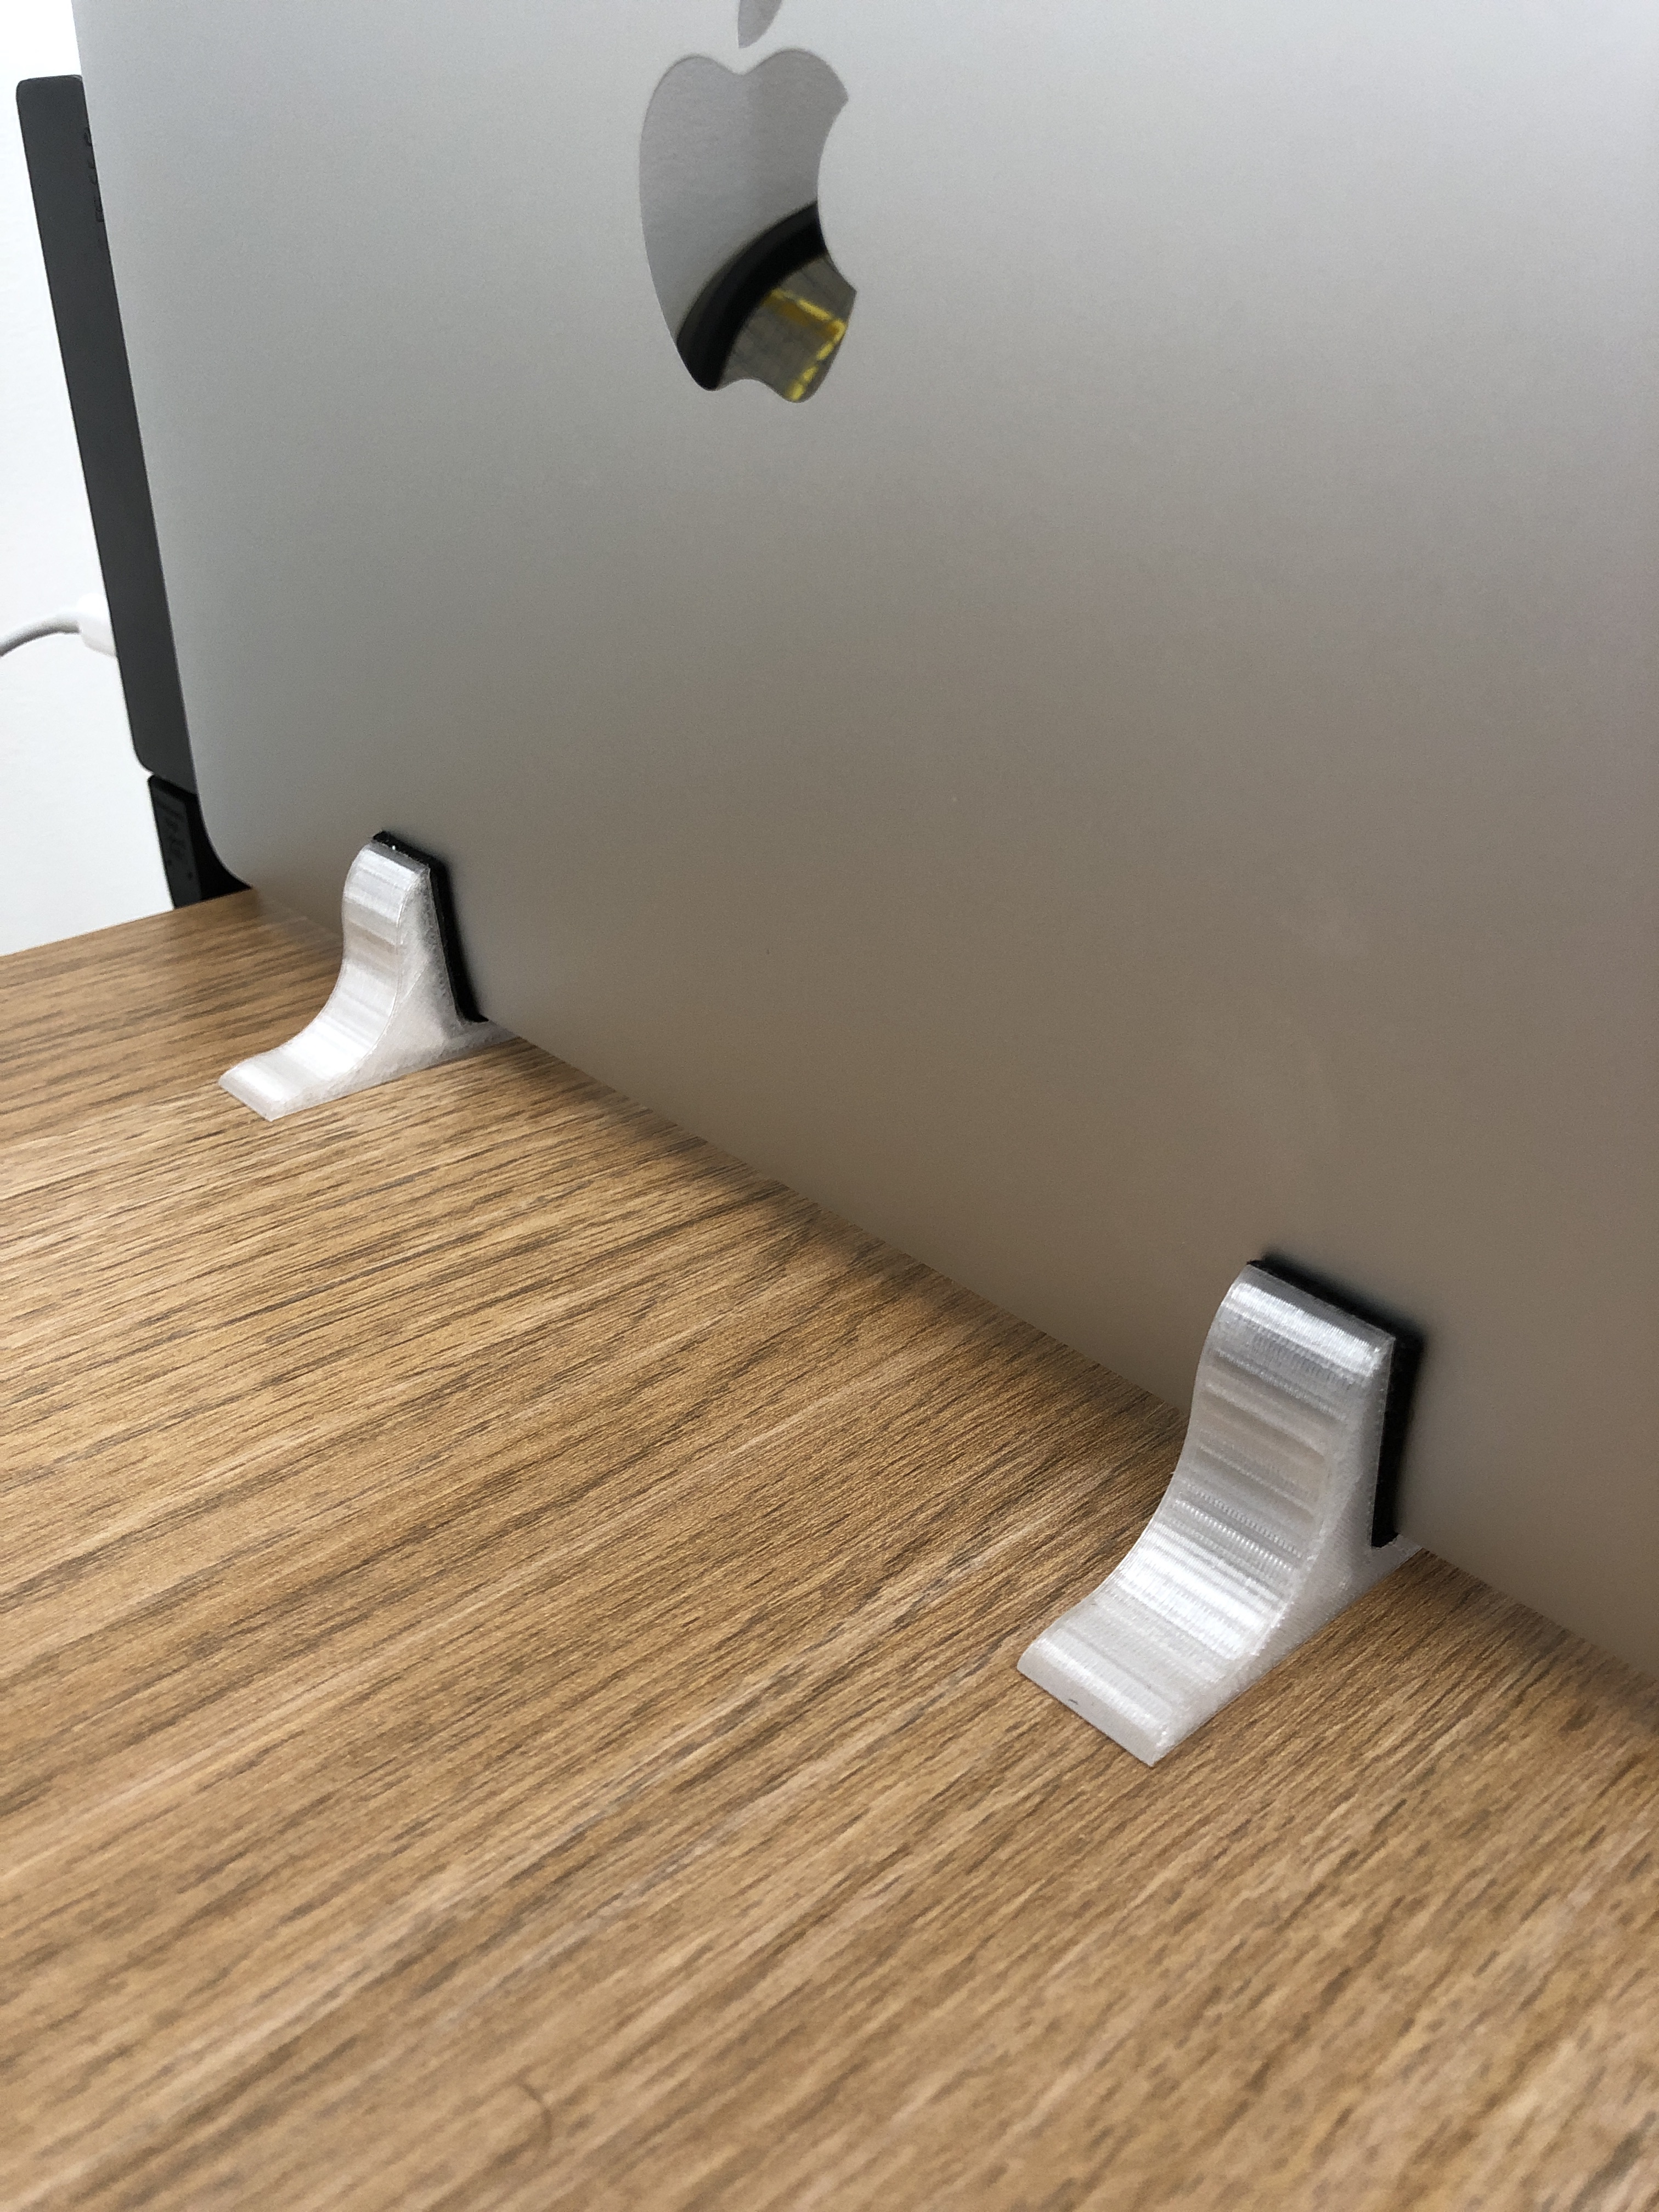 MacBook Pro 2018 Stand